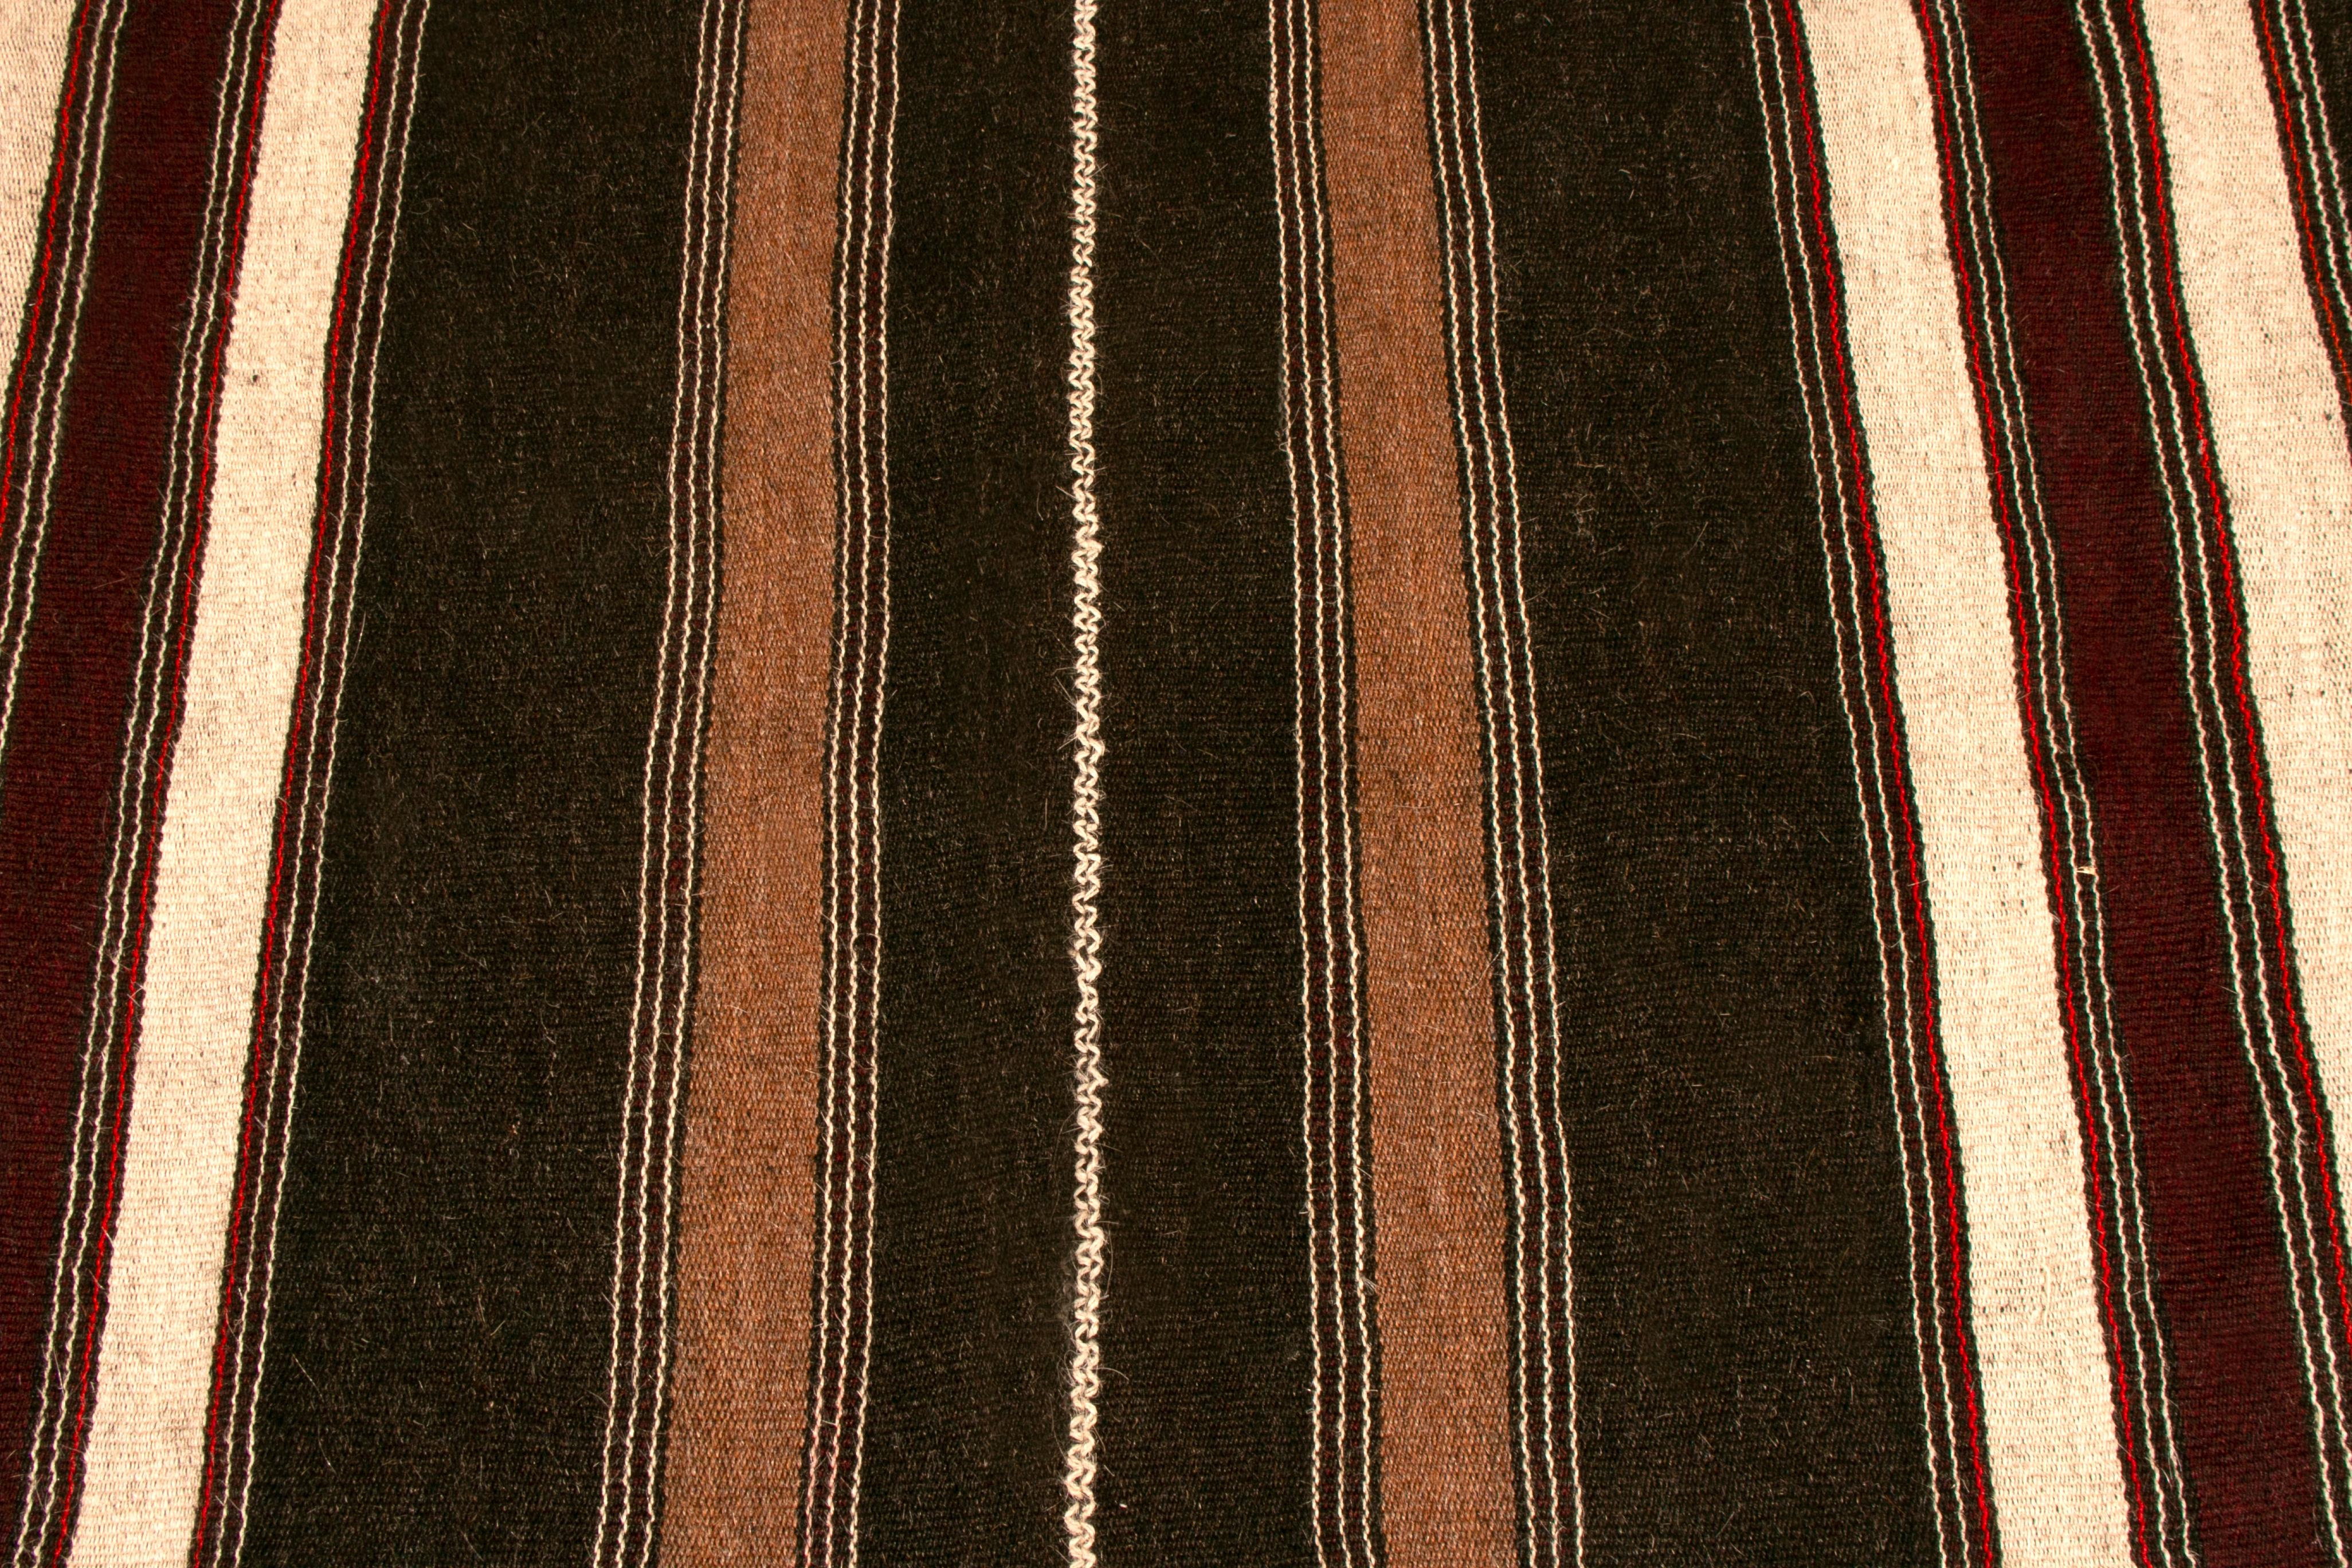 Mid-20th Century 1950s Midcentury Persian Kilim Black and Beige-Brown Striped Vintage Flat-Weave